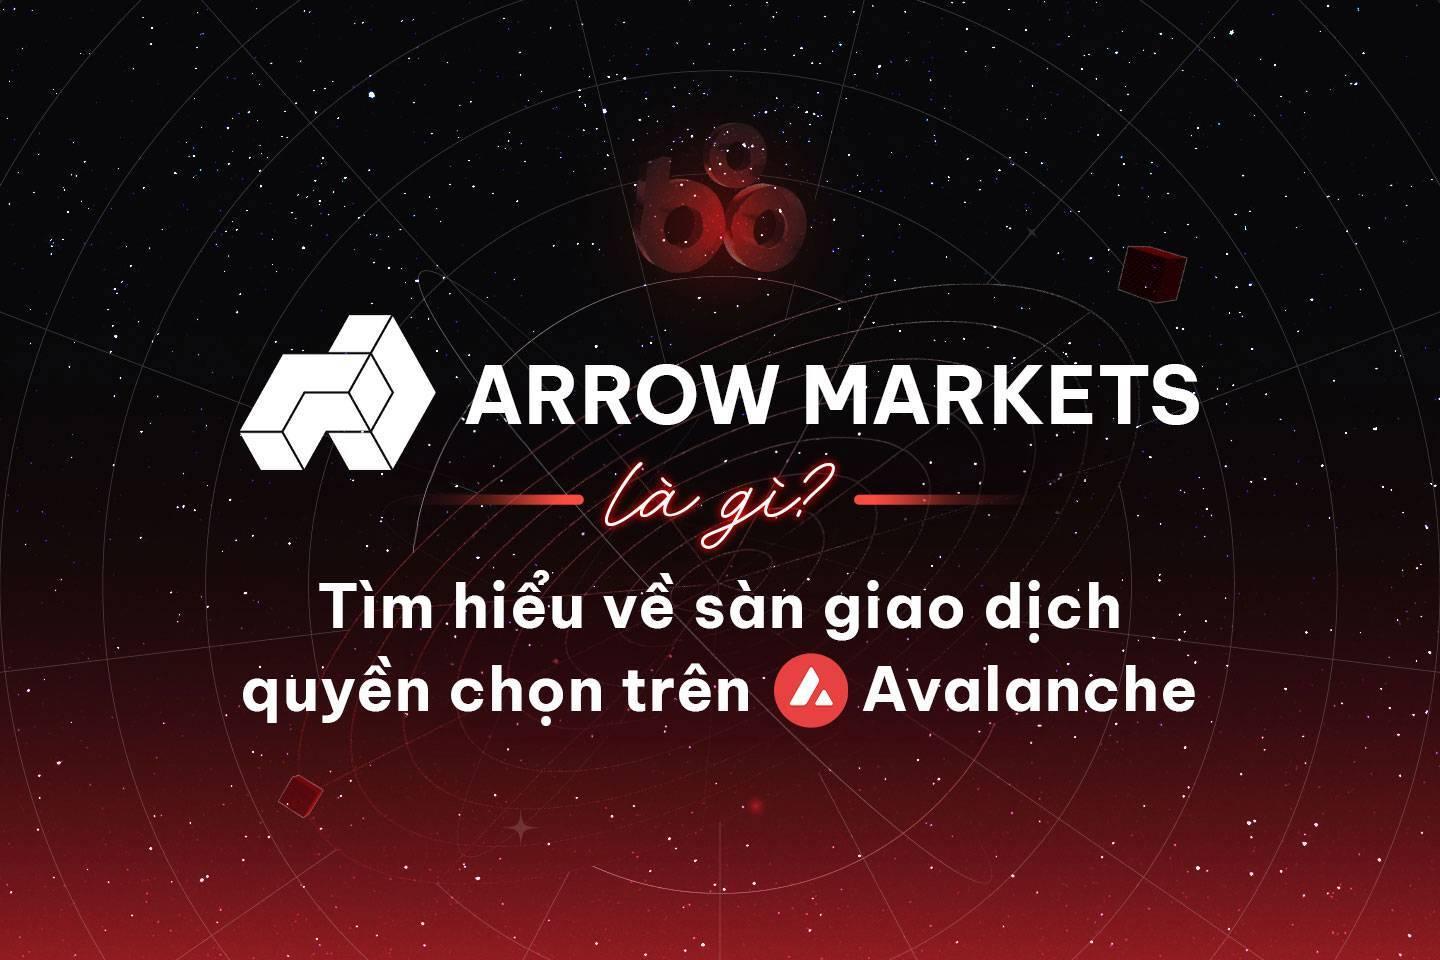 arrow-markets-la-gi-tim-hieu-ve-san-giao-dich-quyen-chon-tren-avalanche